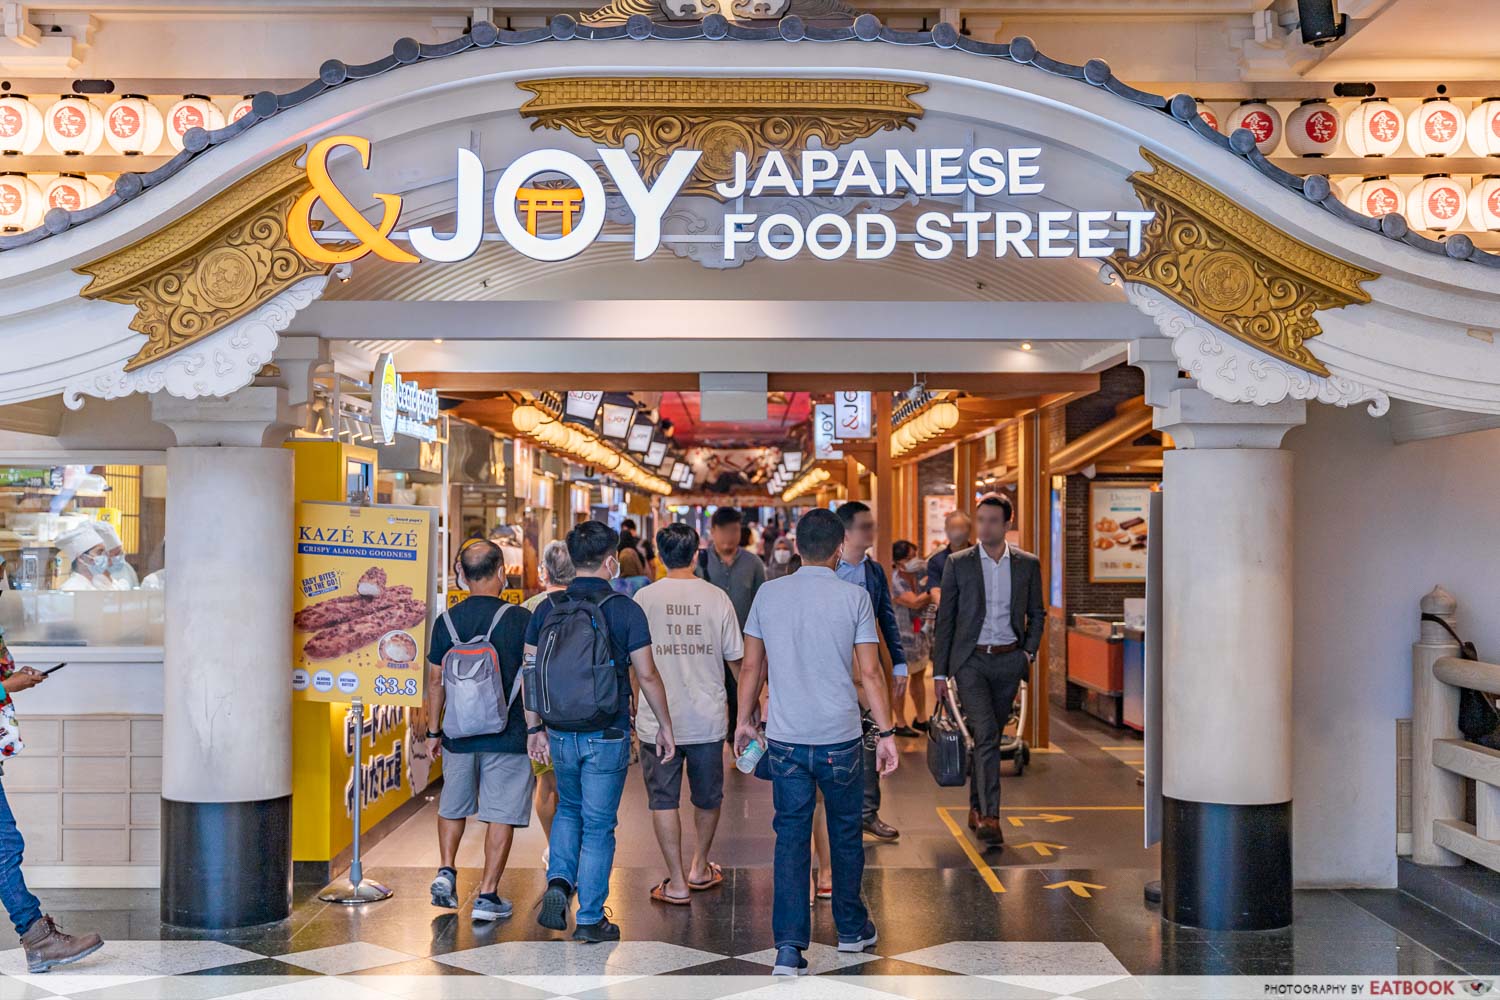 &joy japanese food street jurong point - signboard